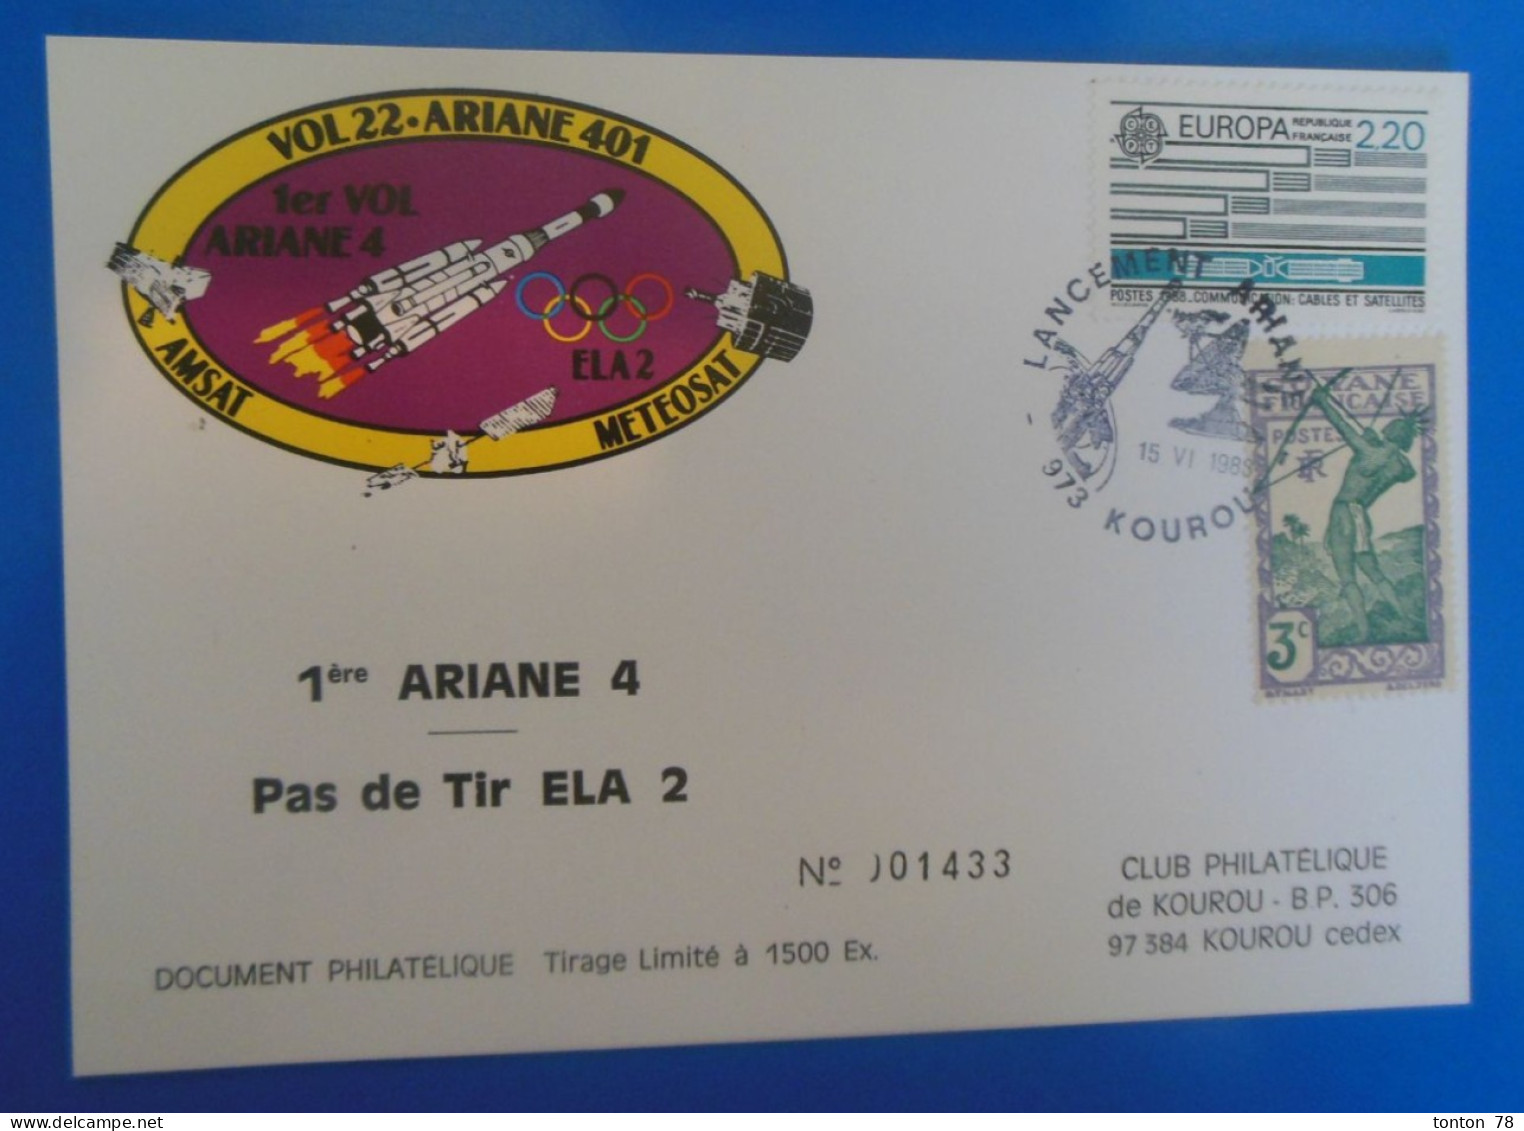 LANCEMENT DE LA FUSEE ARIANE DE KOUROU SUR CARTE DE 1988  -  1500 EX - Europe